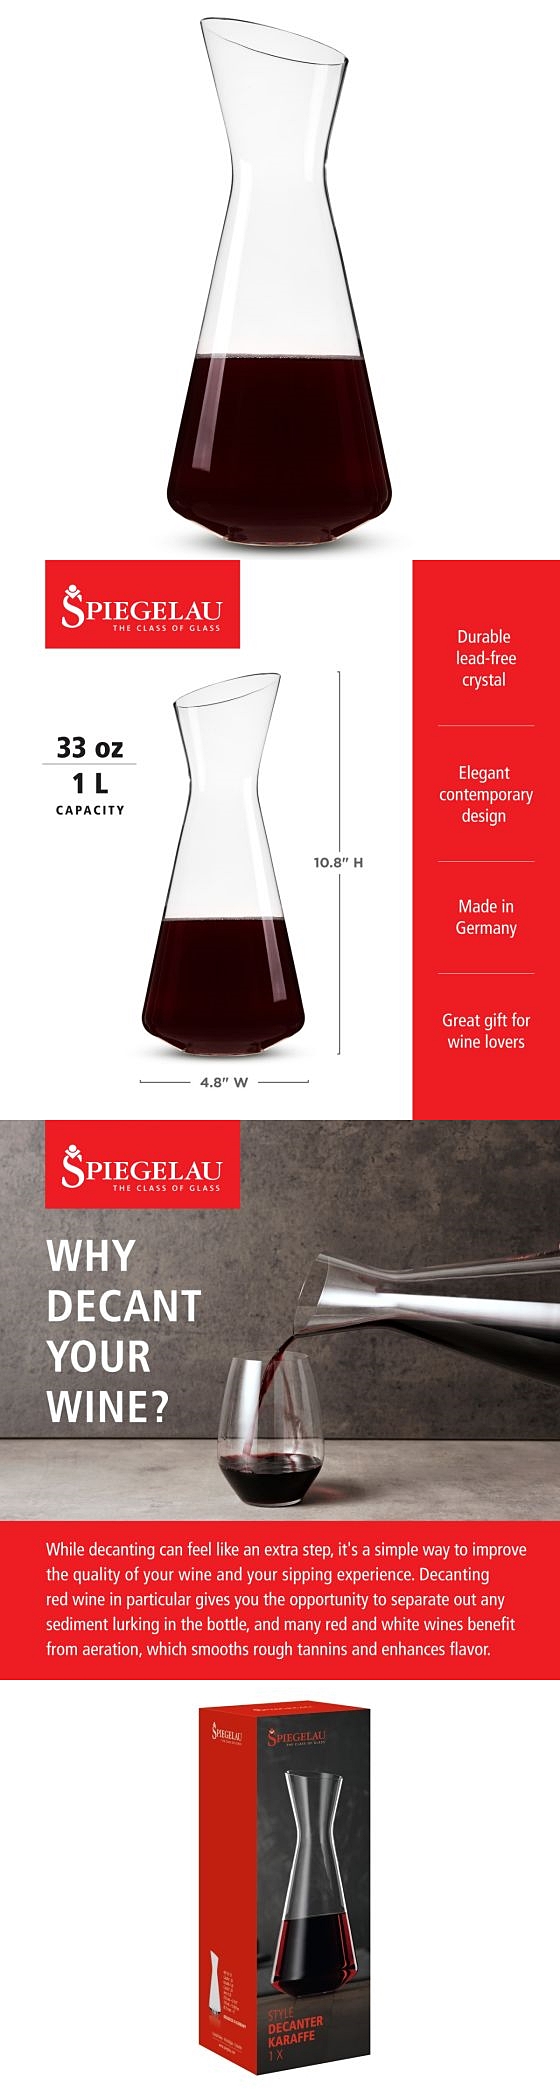 Spiegelau Style Contemporary Design 1L Lead-Free Crystal Wine Decanter